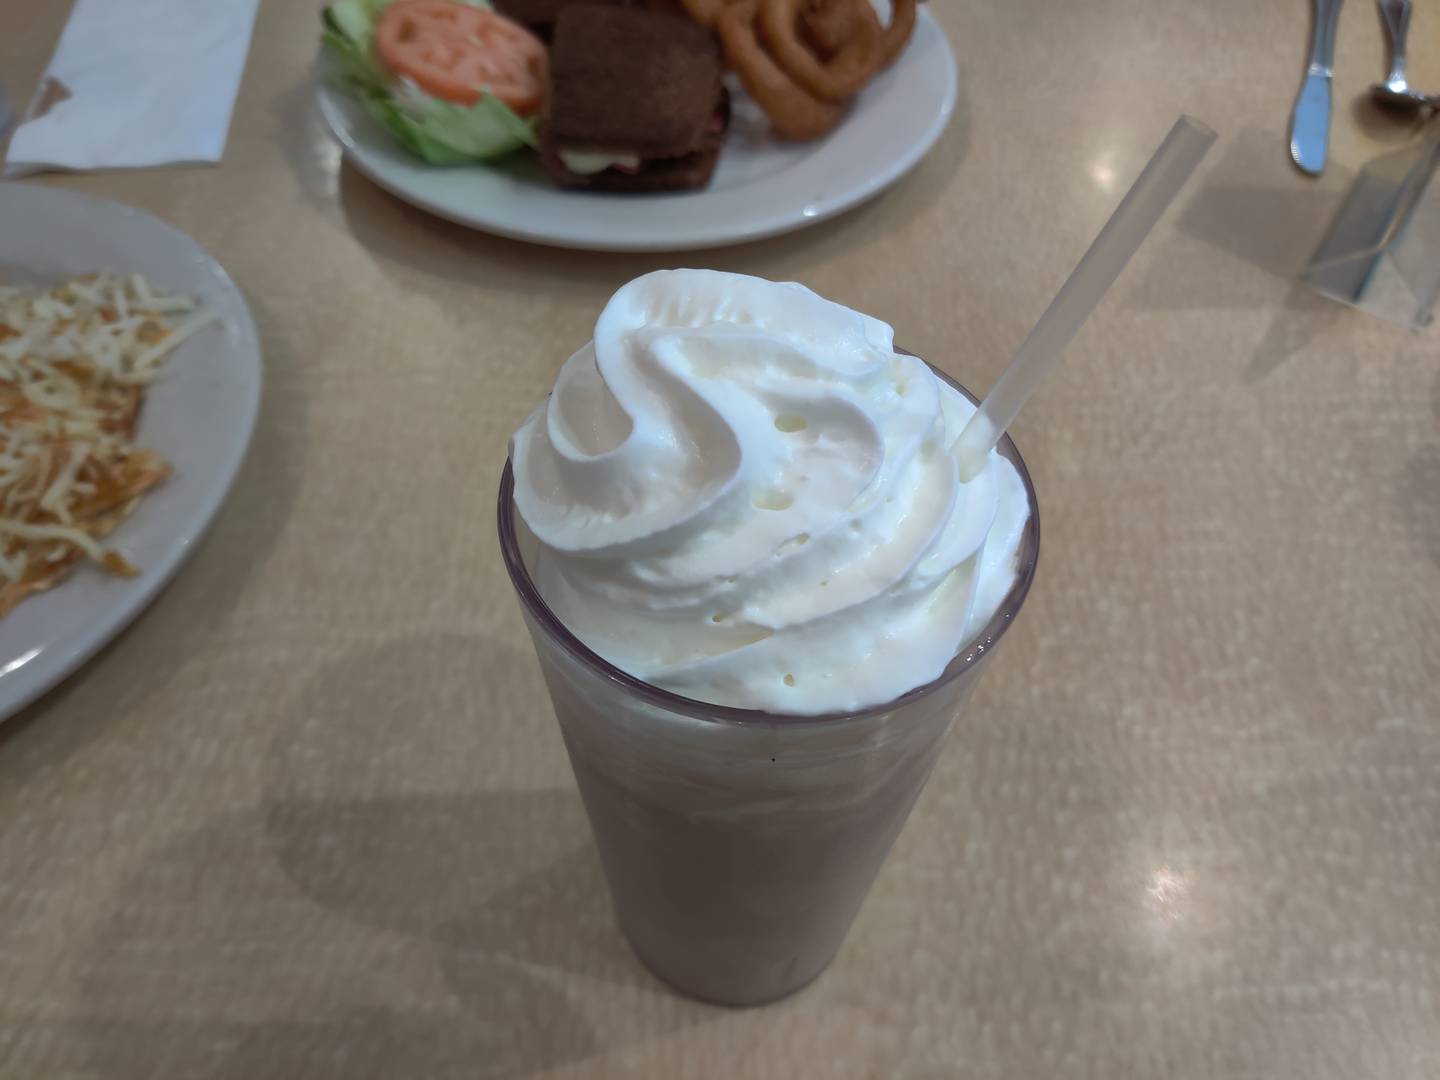 A chocolate milkshake at Randall's Pancake House & Restaurant in South Elgin.